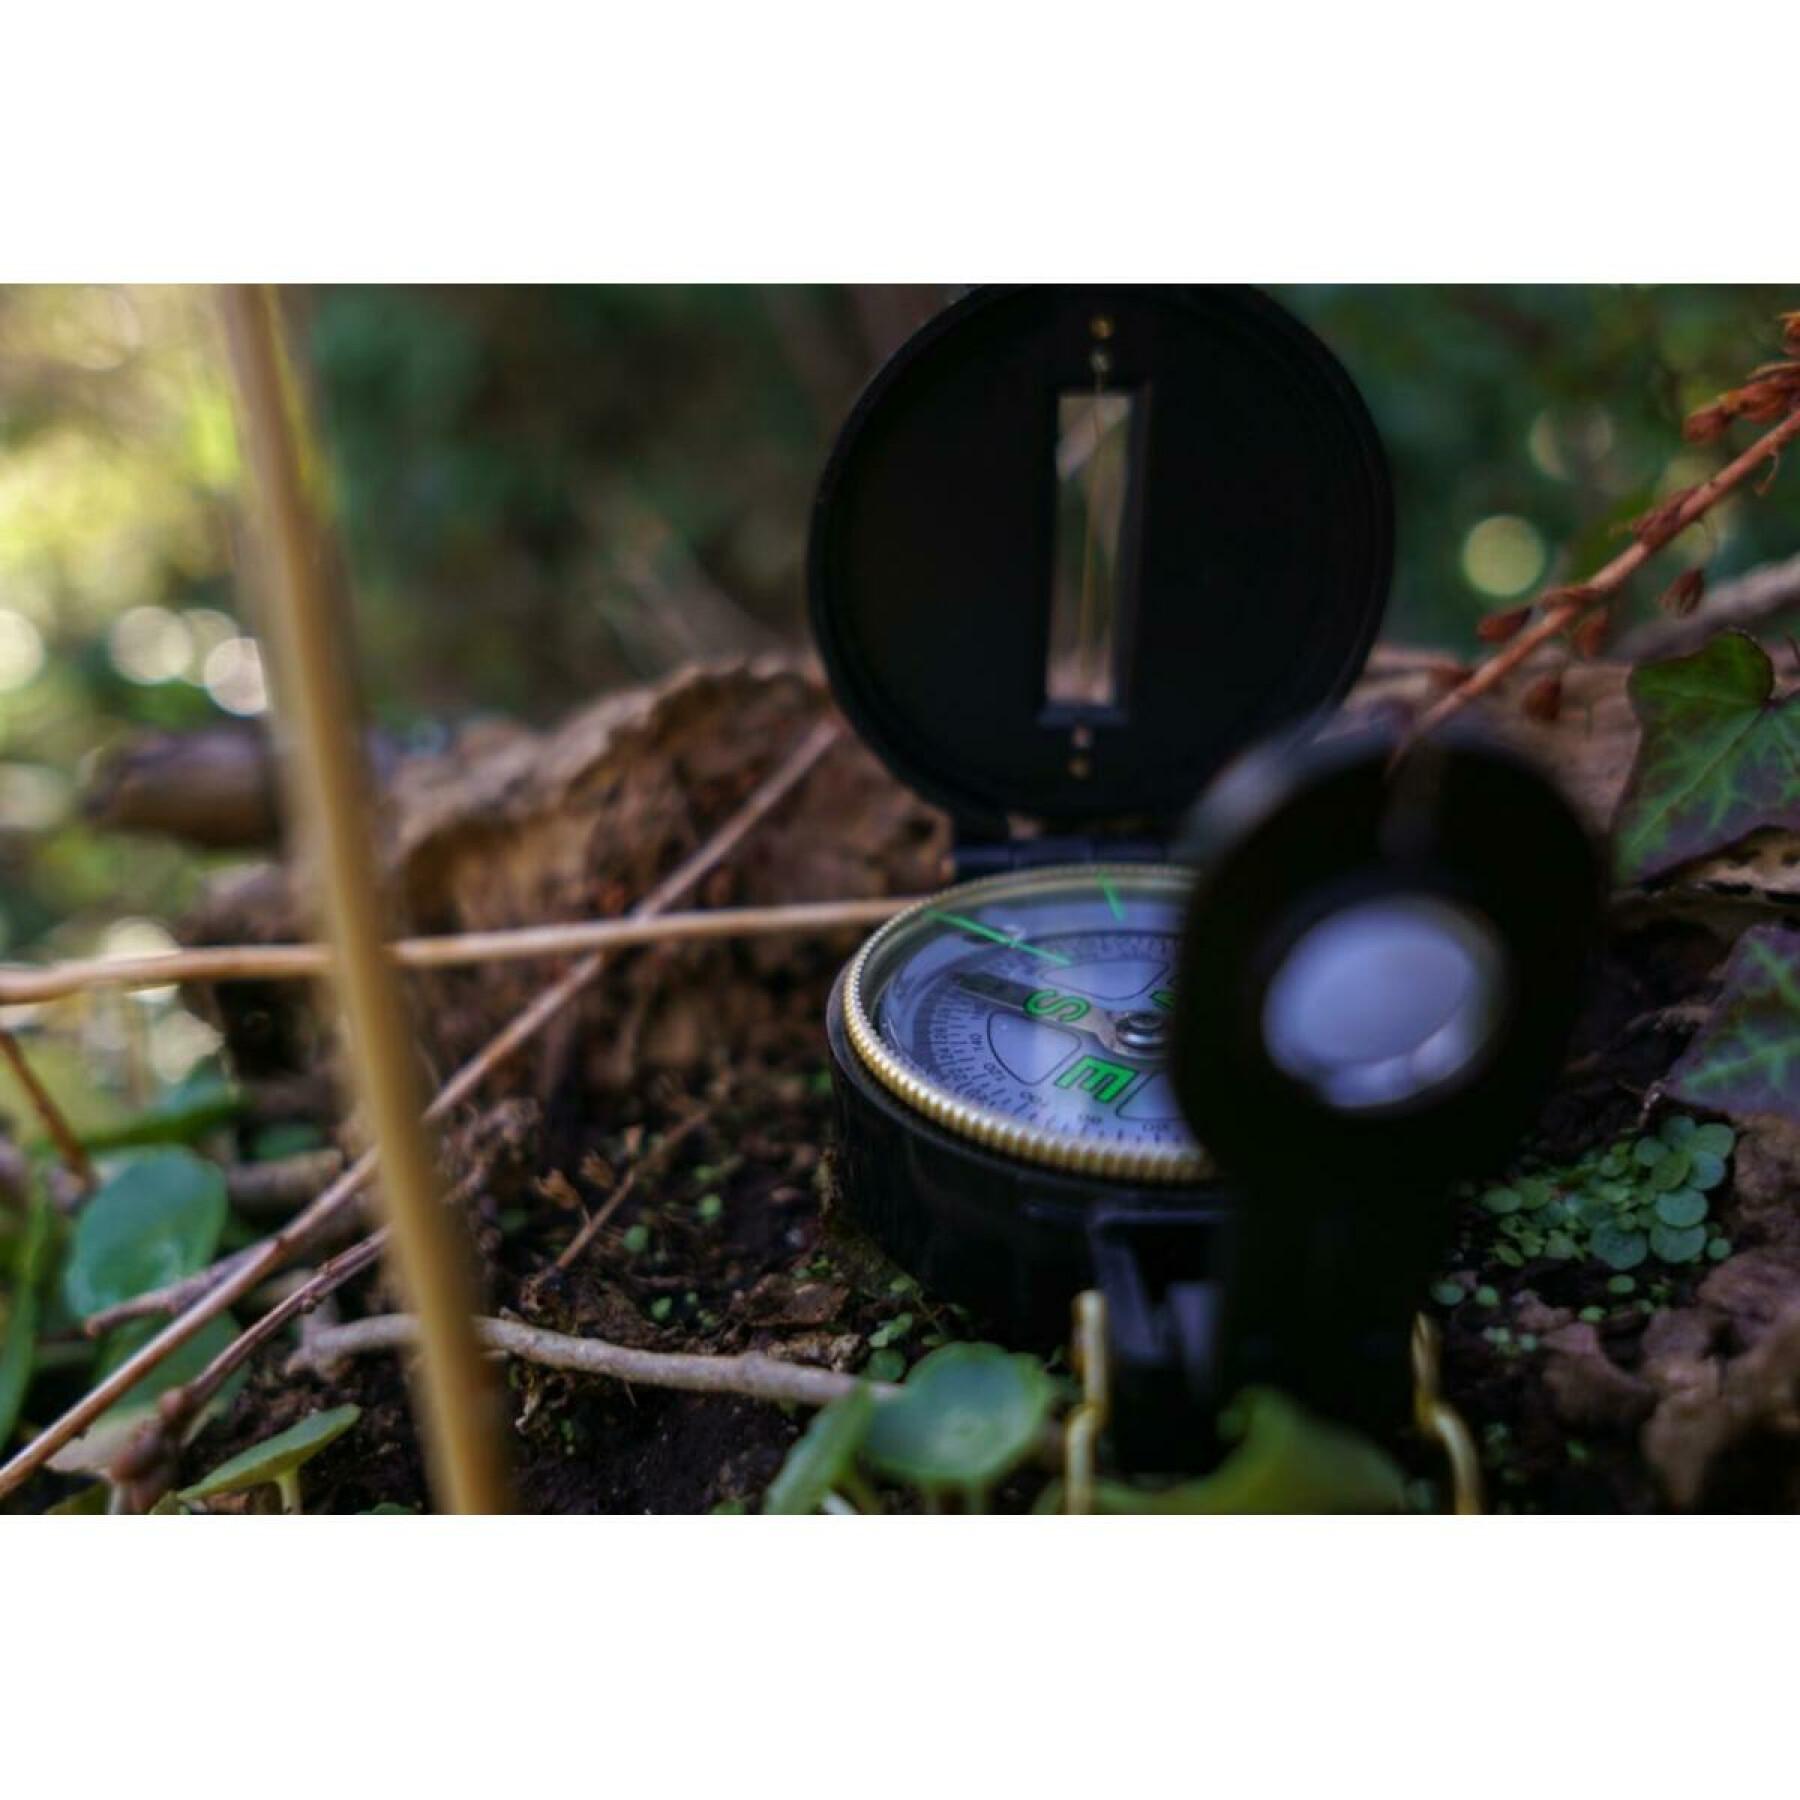 Sport compass with sight Highlander lensatic